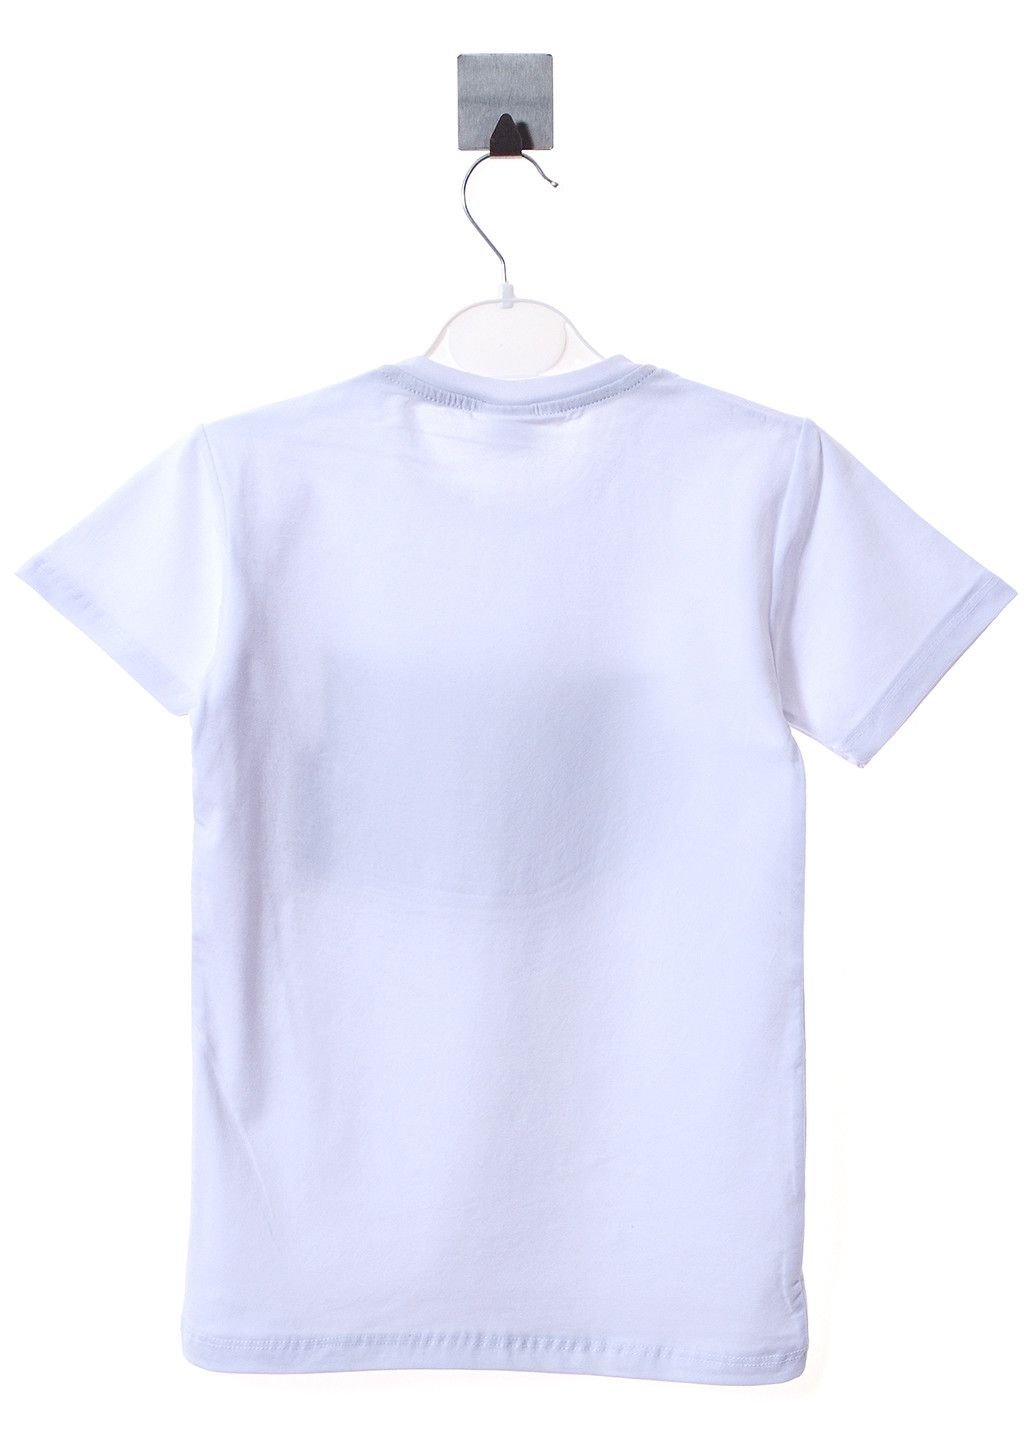 Белая летняя футболка Onem